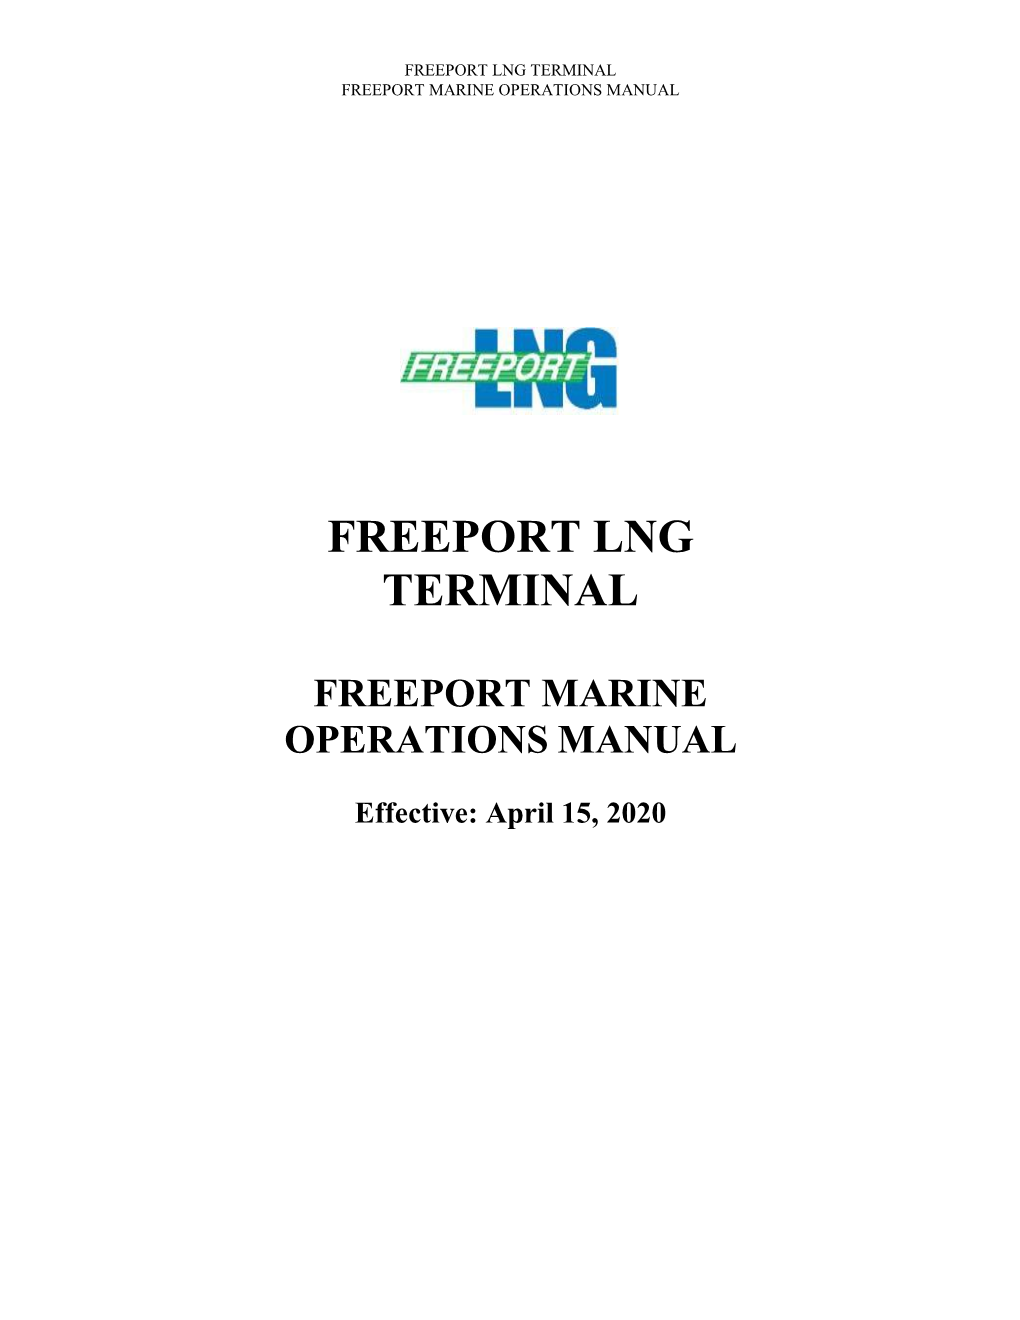 Freeport Lng Terminal Freeport Marine Operations Manual